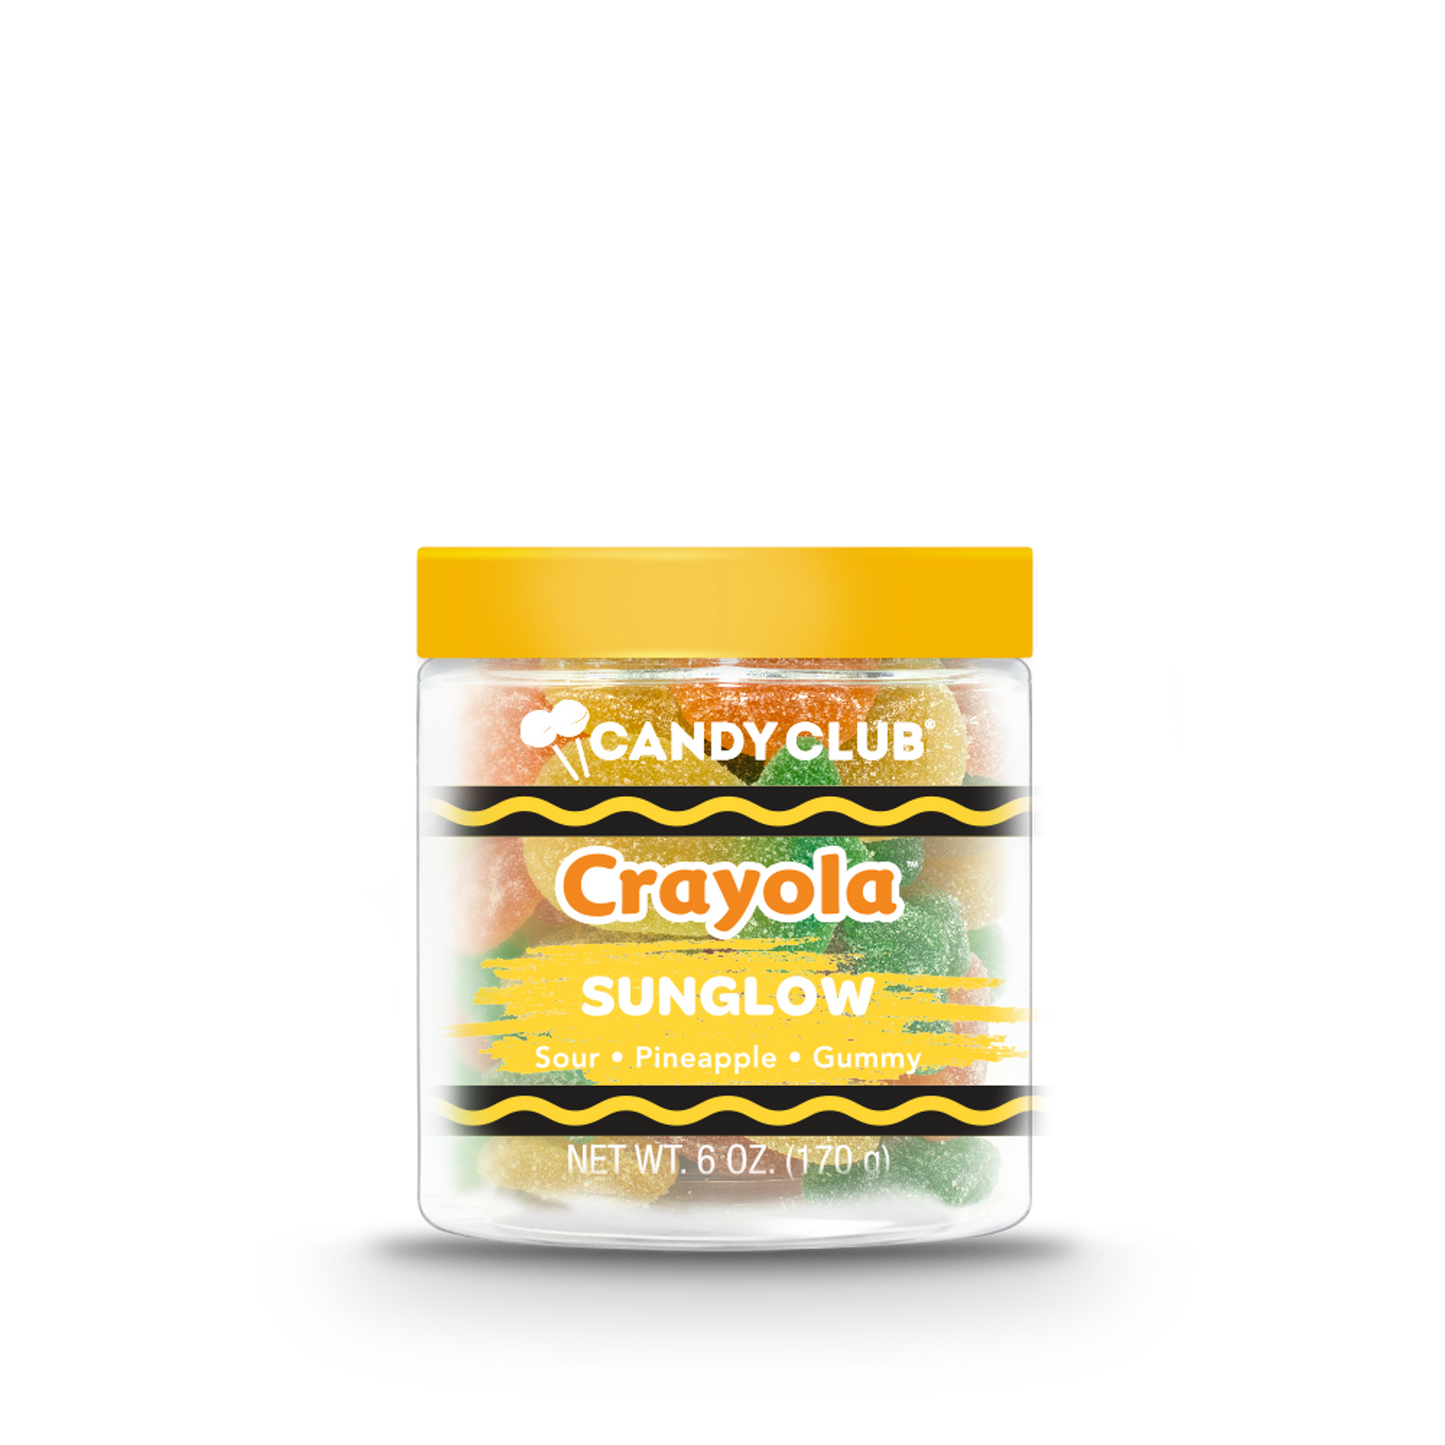 Sunglow Crayola - Candy Club Gourmet Candy